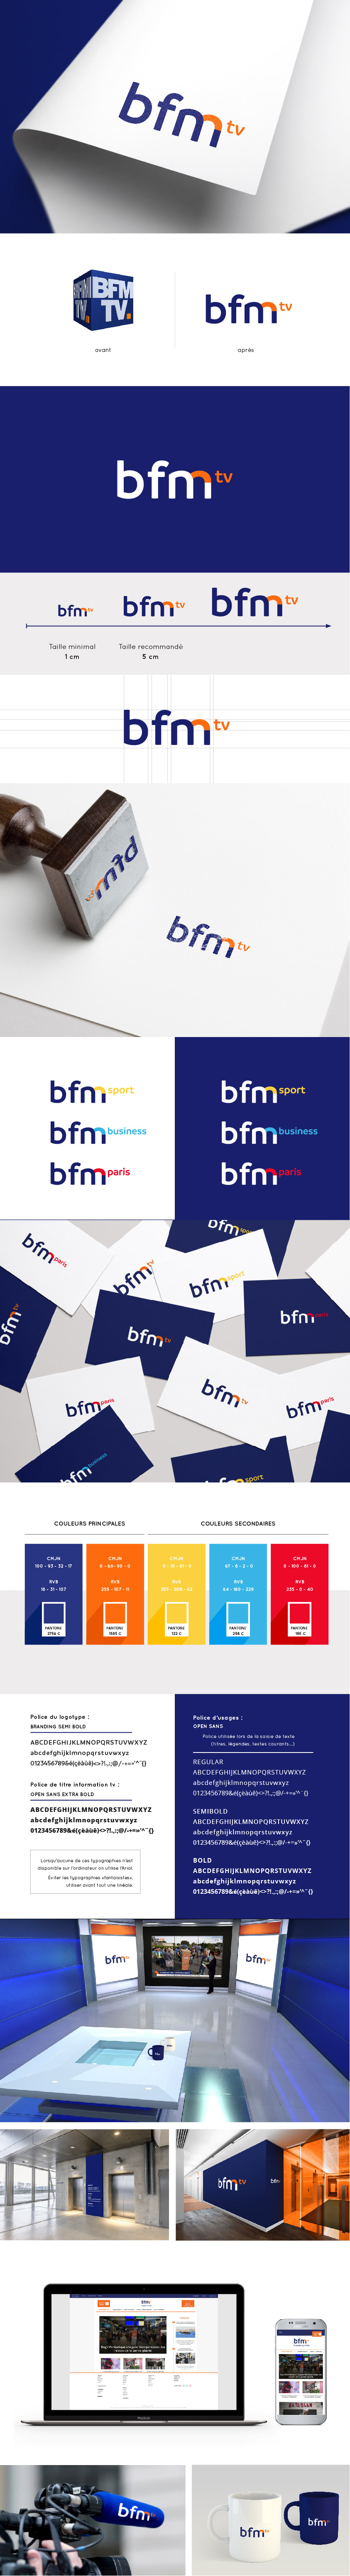 Refonte logo BFMTV